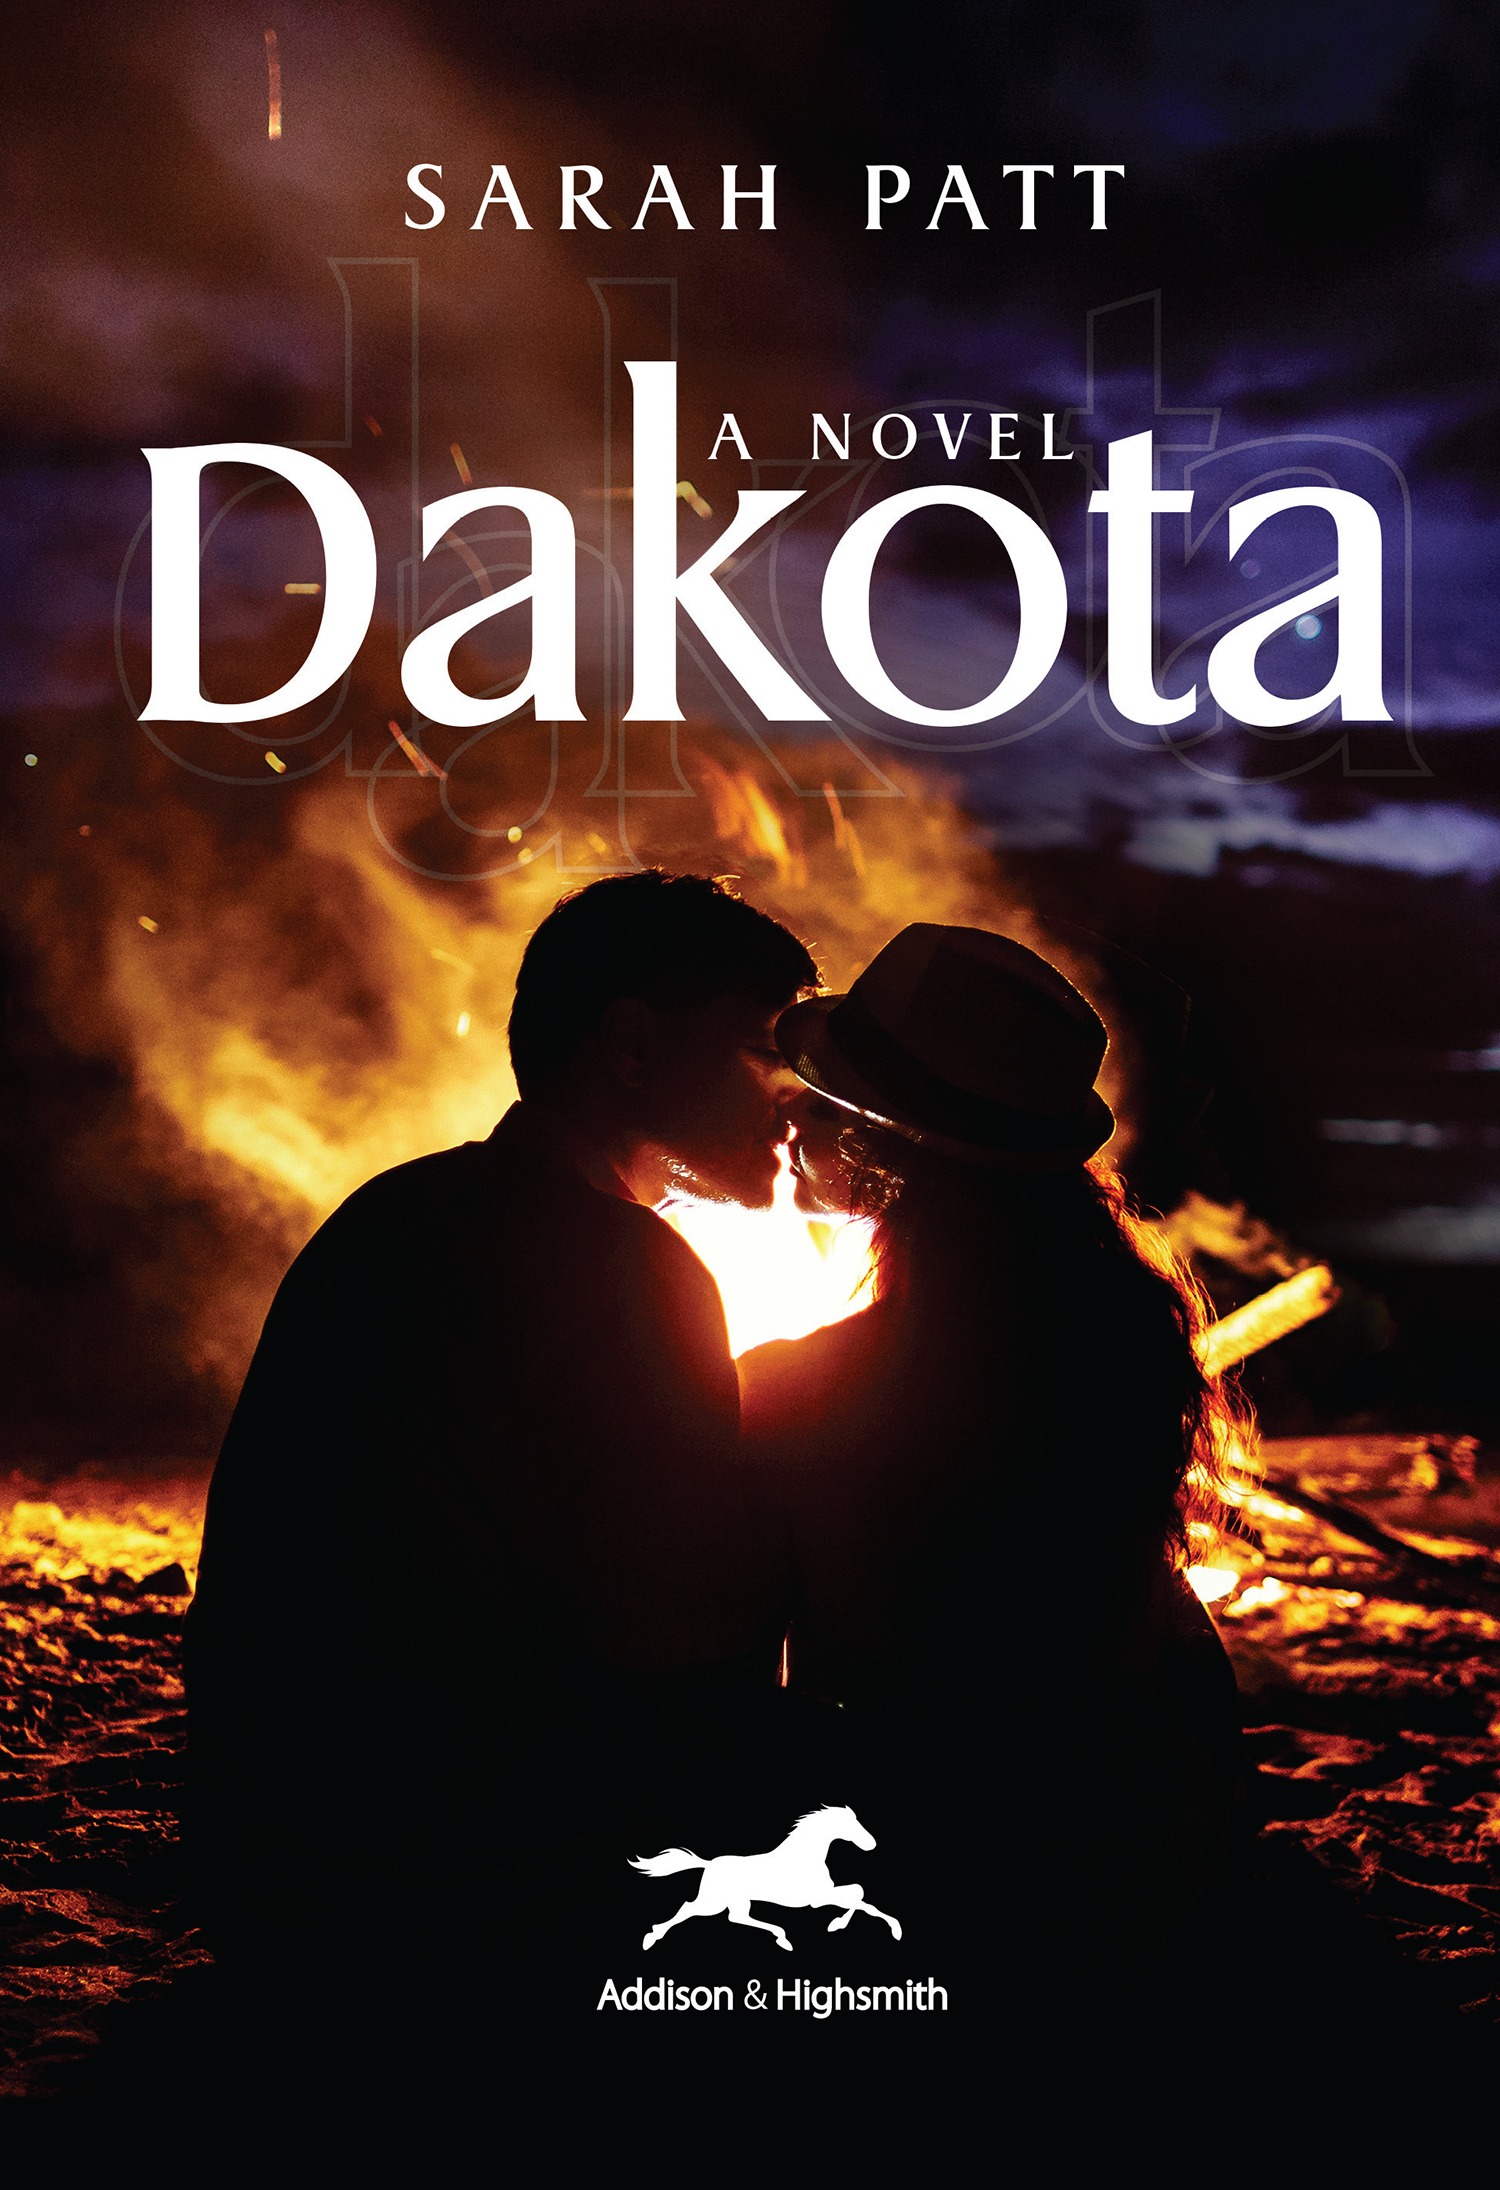 Histria Books announces the release of Dakota by Sarah Patt